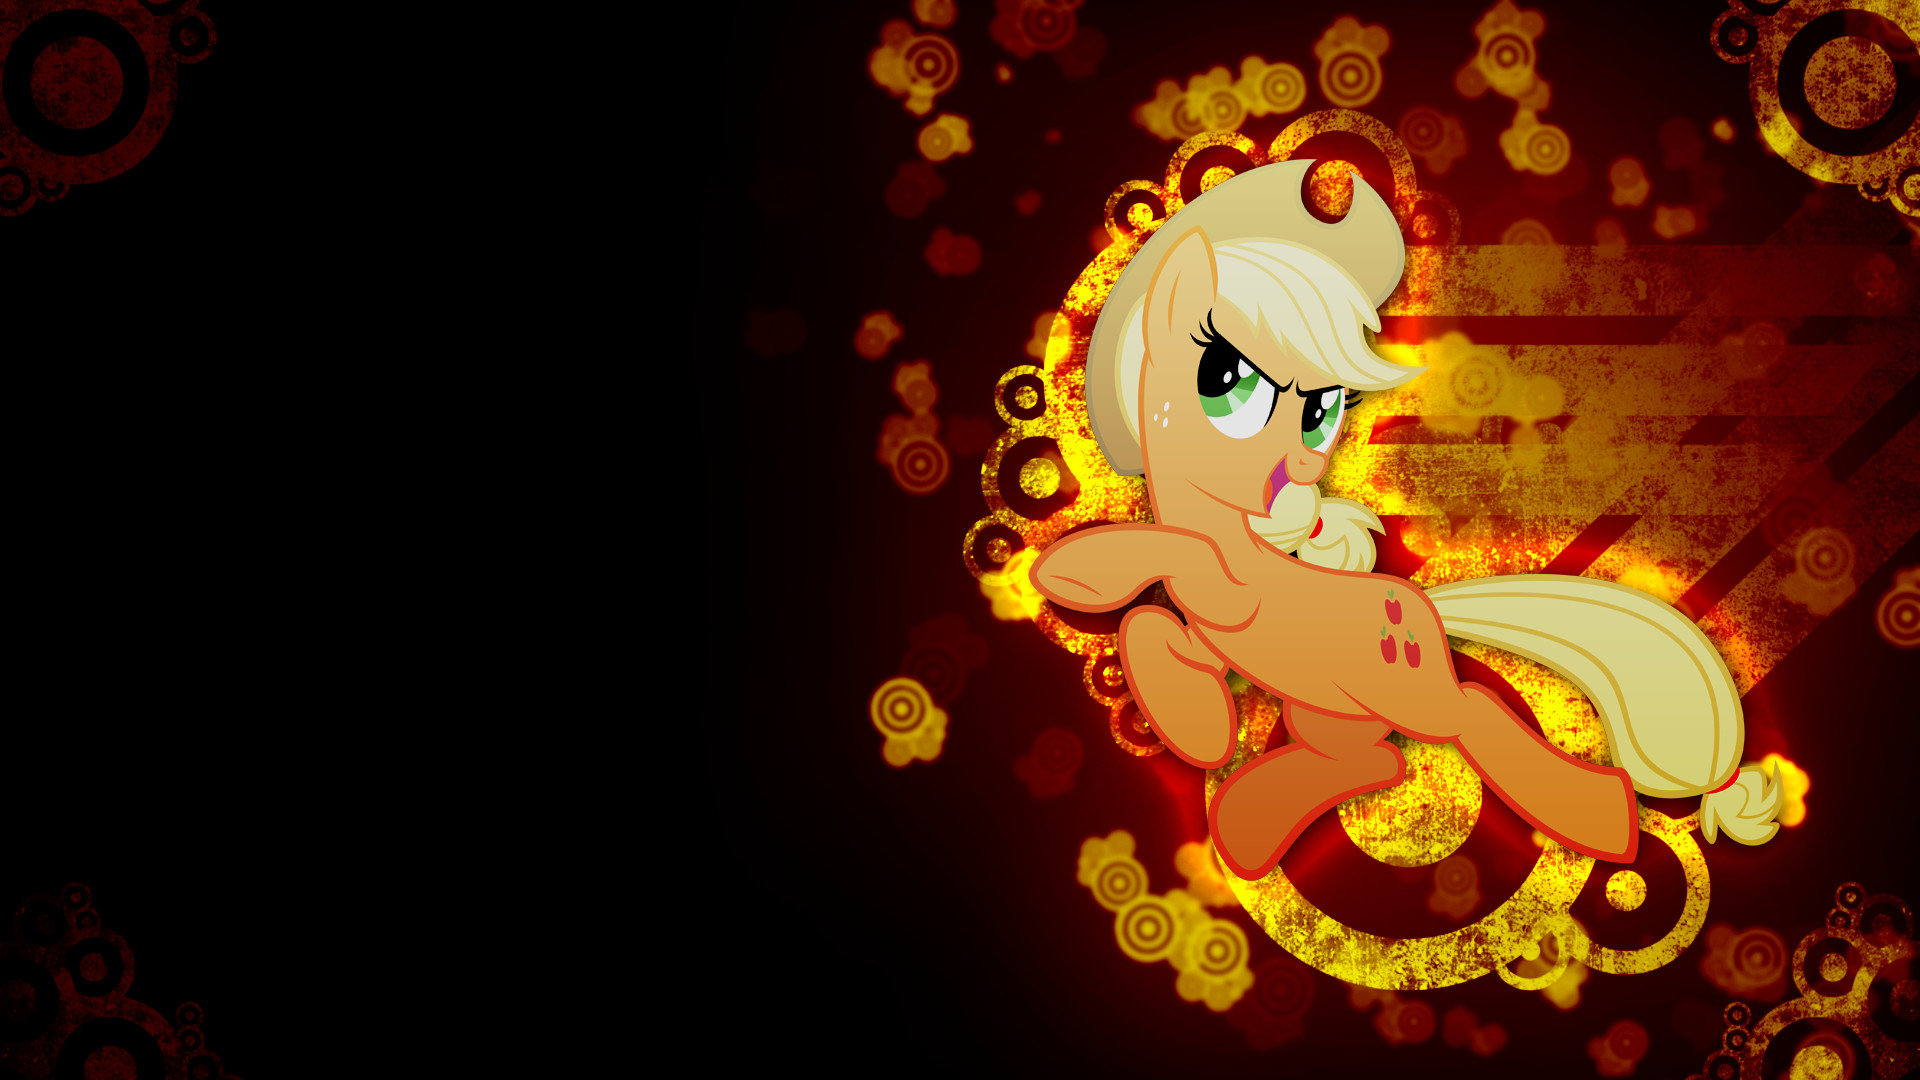 Awesome Applejack (My Little Pony) free wallpaper ID:154110 for full hd 1920x1080 desktop